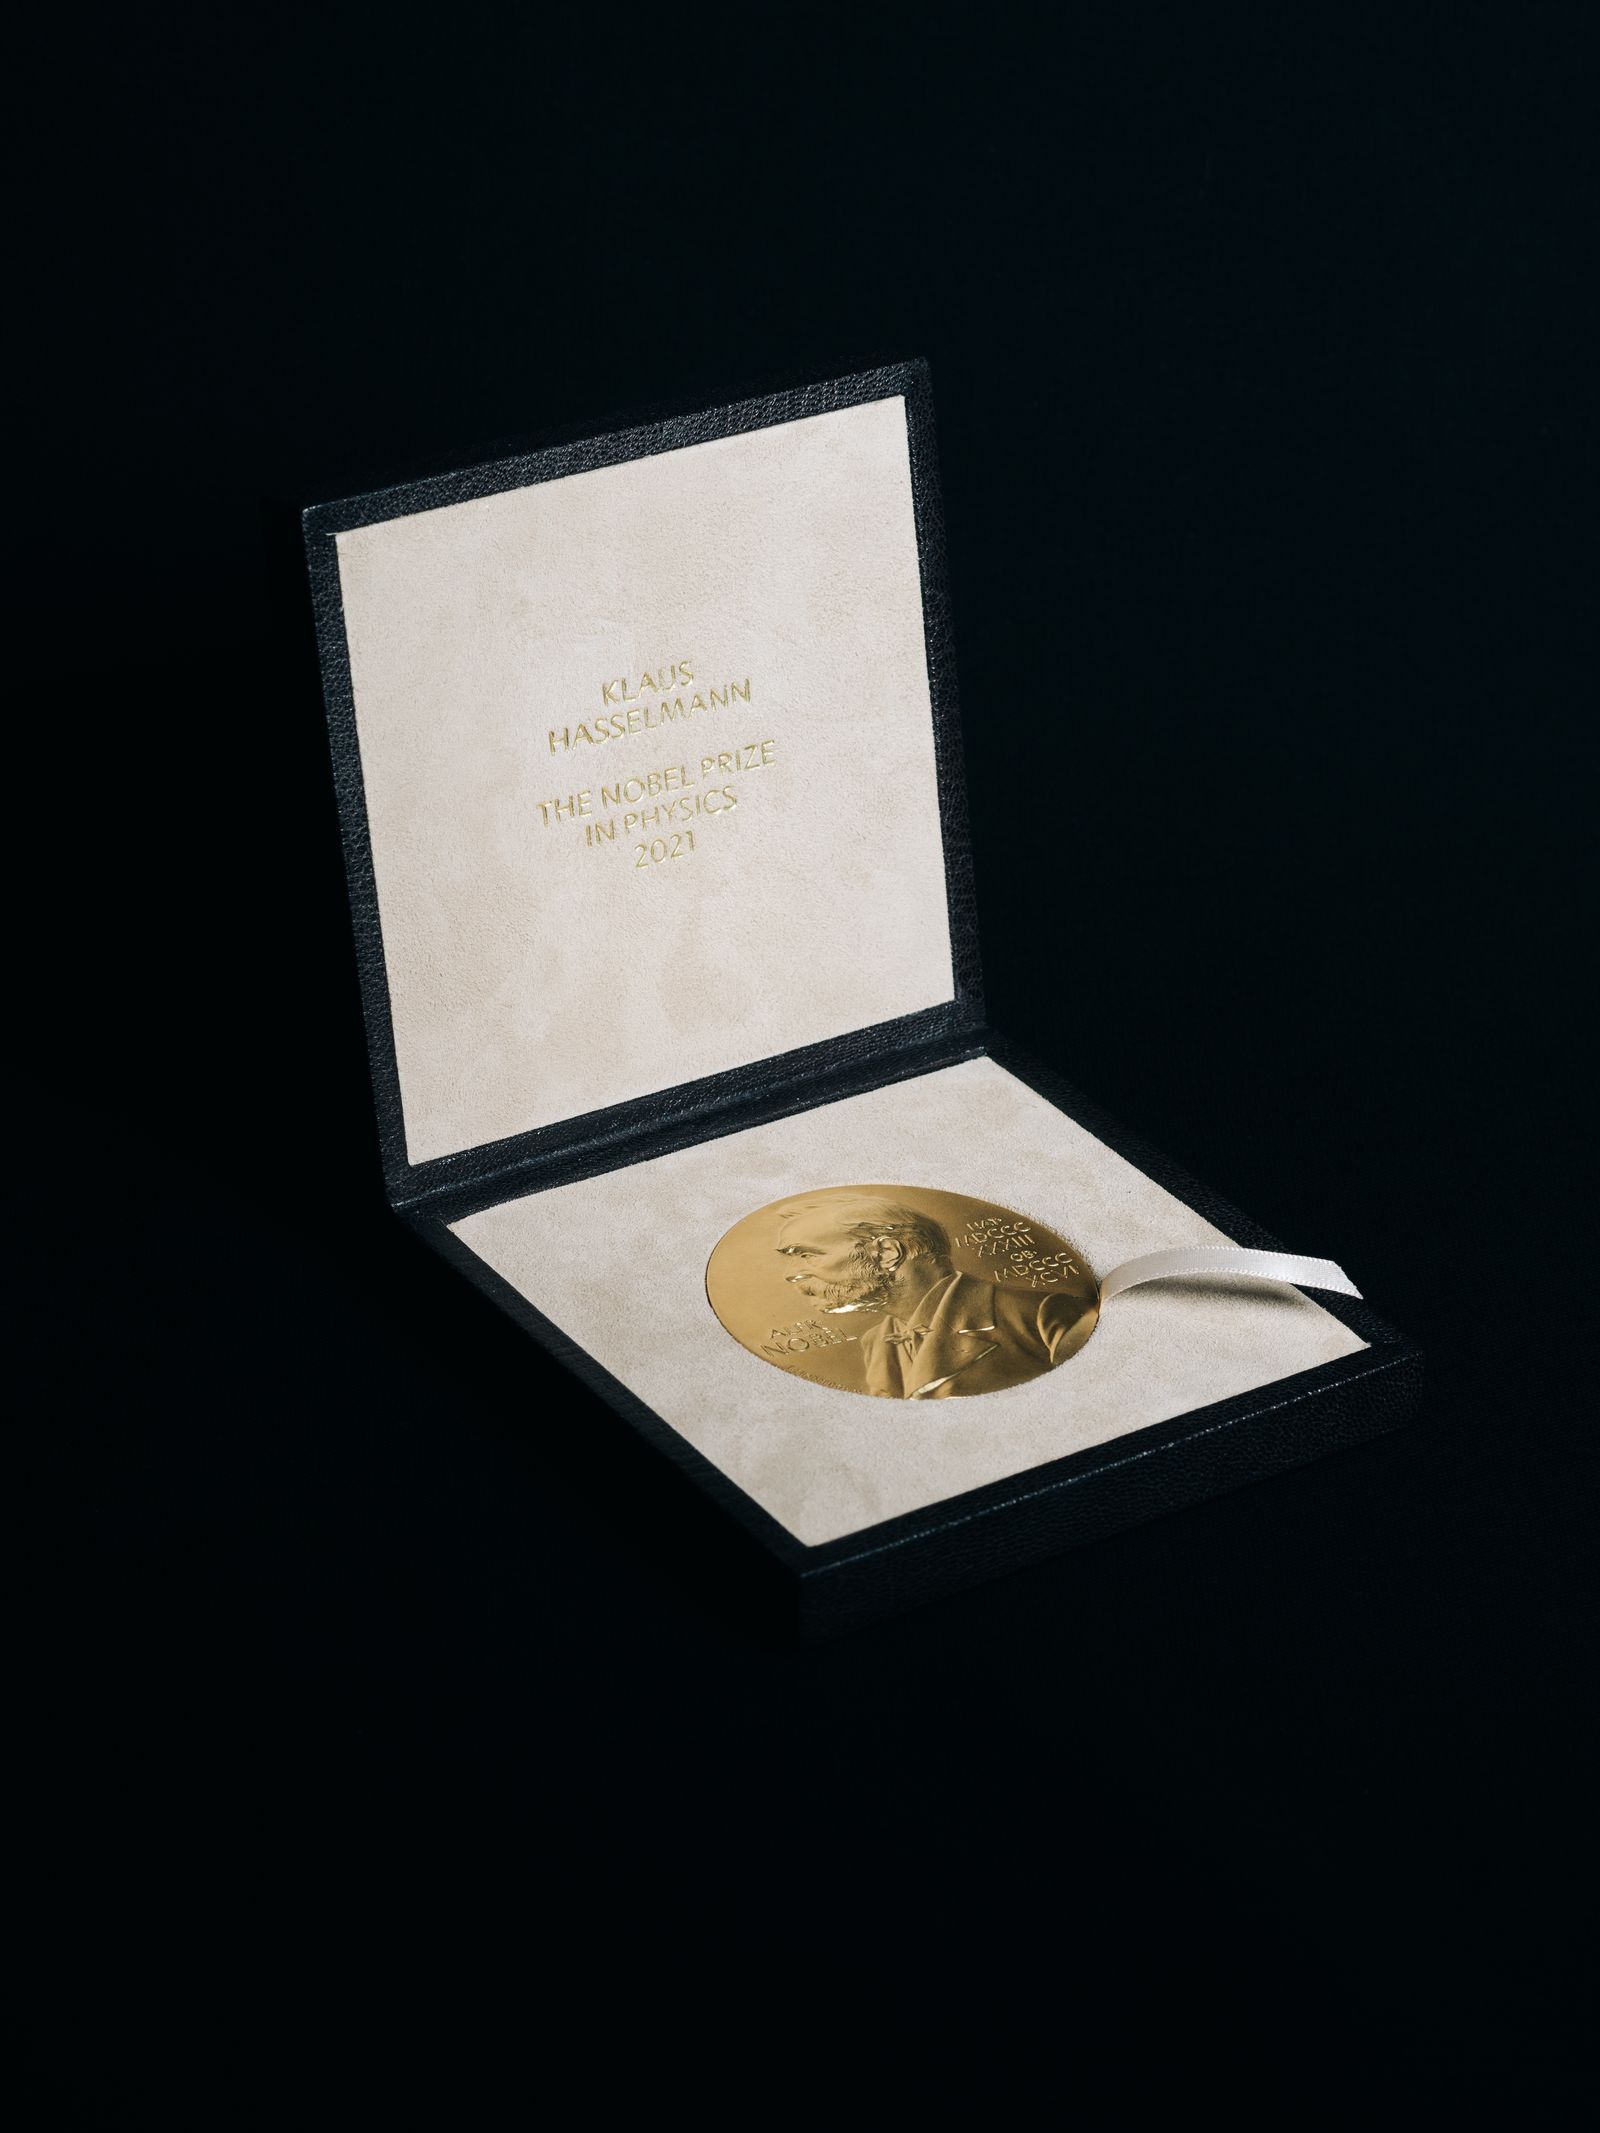 © Jan Richard Heinicke - Klaus Hasselmann's Nobel Prize medal.